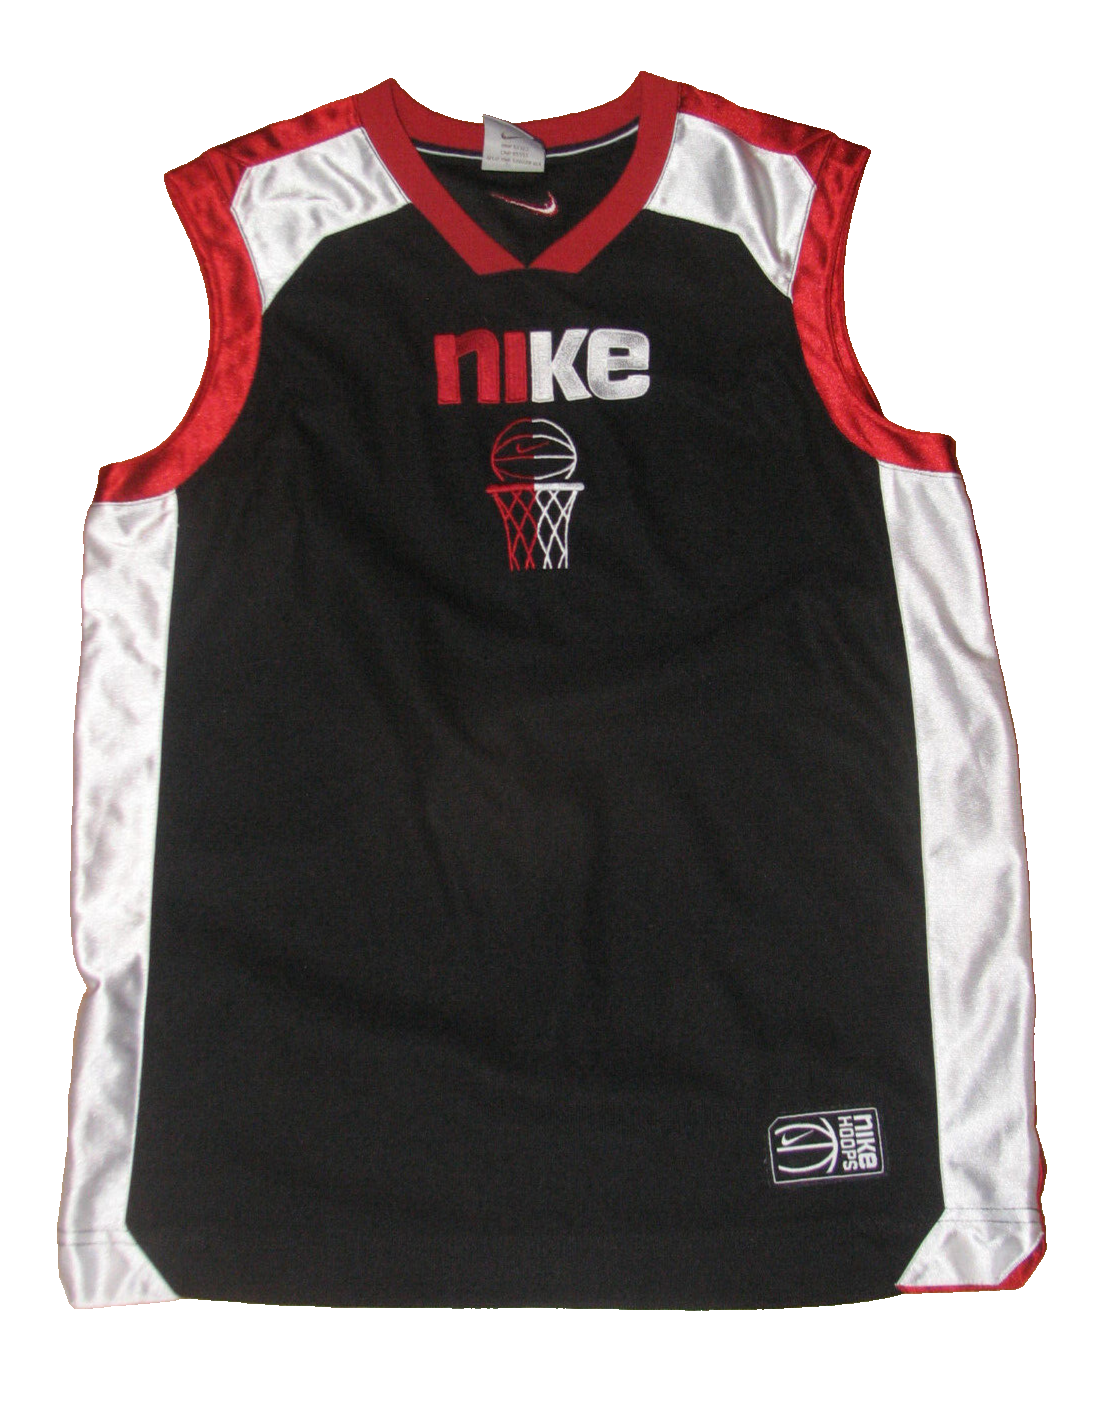 Nike Red Black & White Basketball Tank Top Boys 10/12 M - $9.88